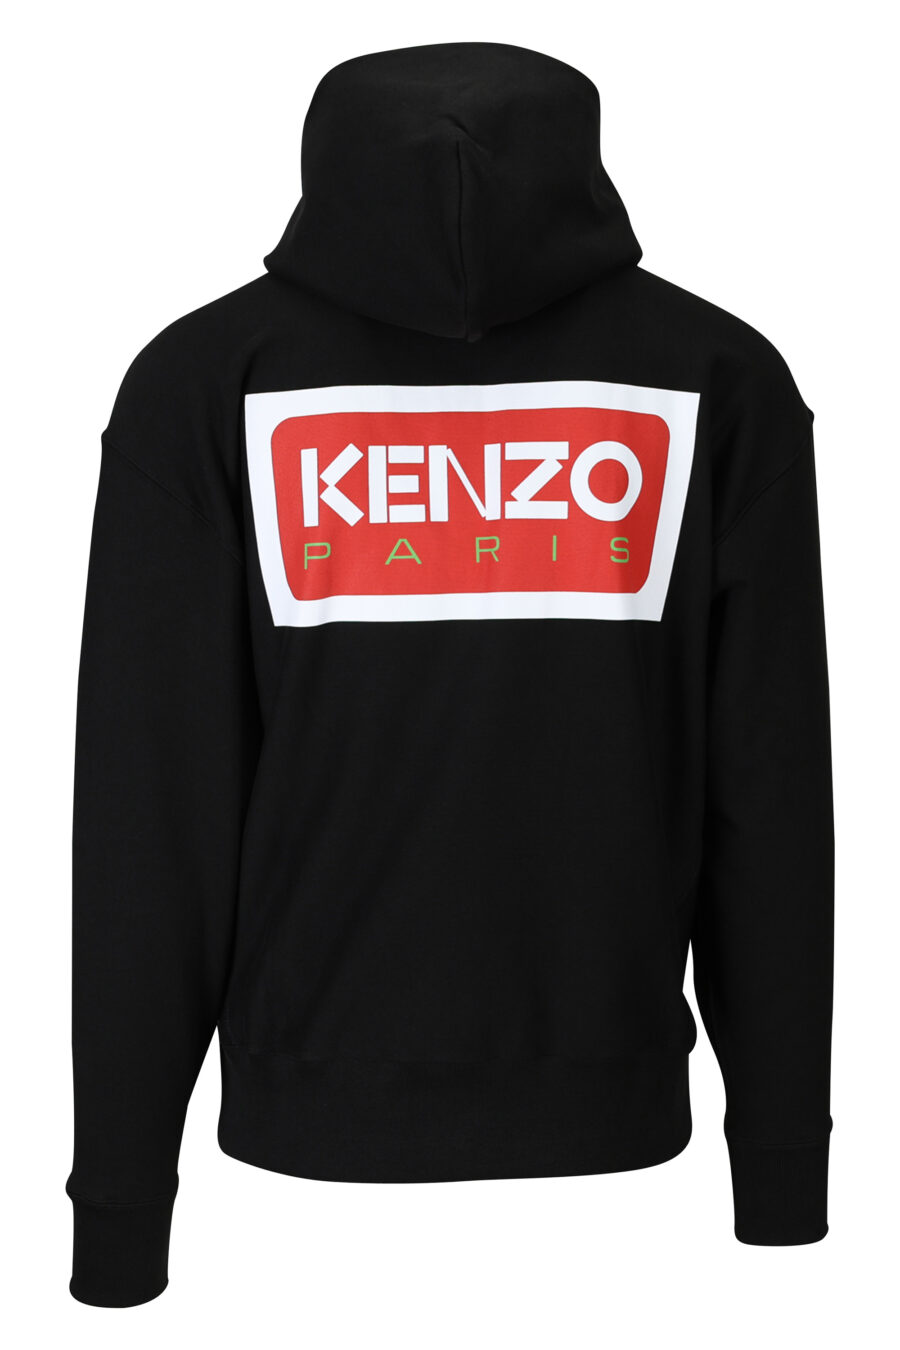 Black oversize sweatshirt with hood and zip and "kenzo paris" logo - 3612230539334 1